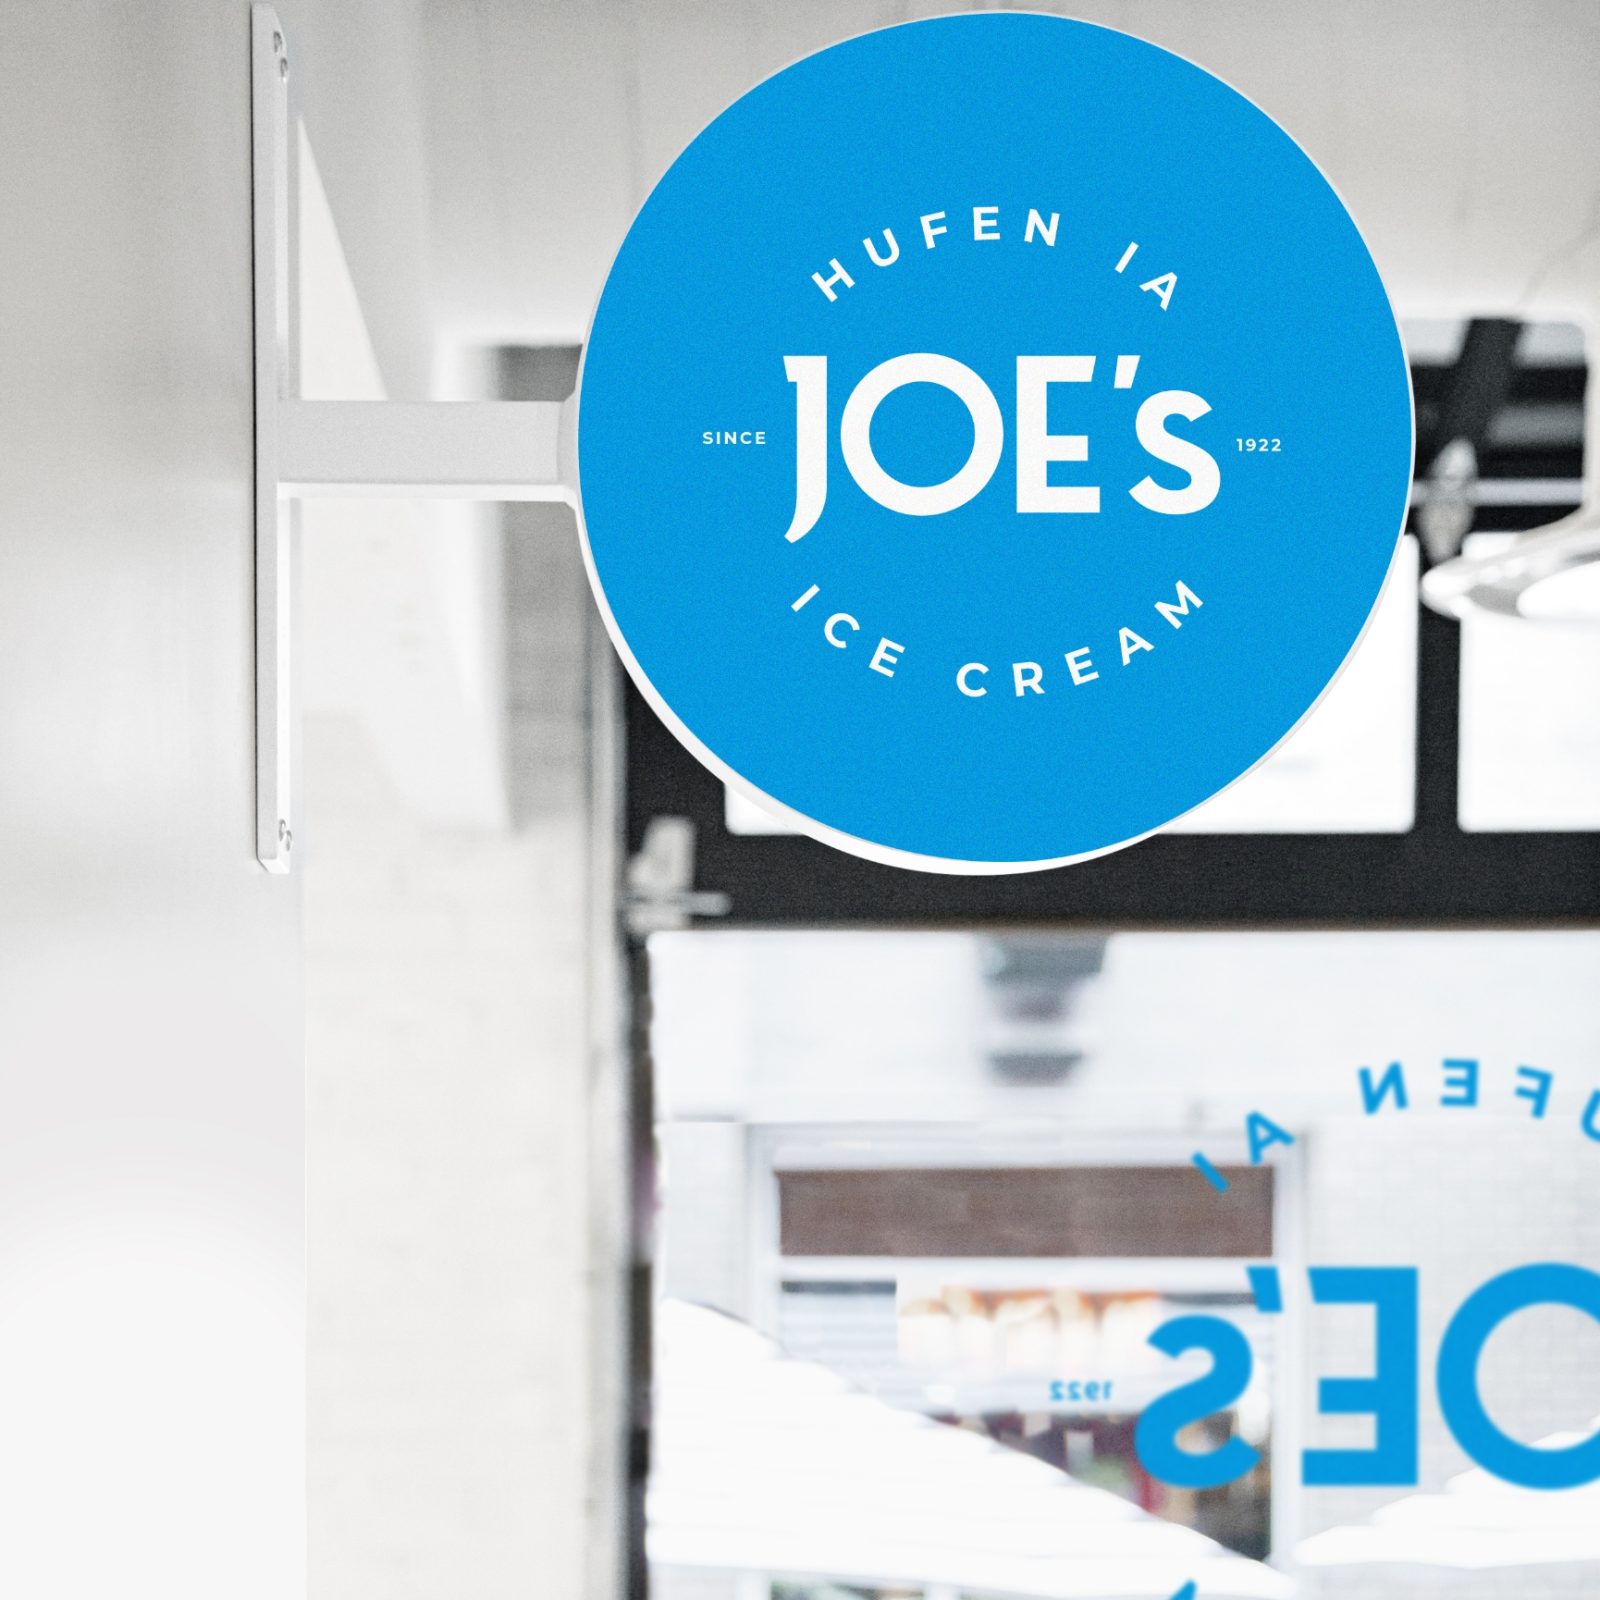 Joe’s Ice Cream